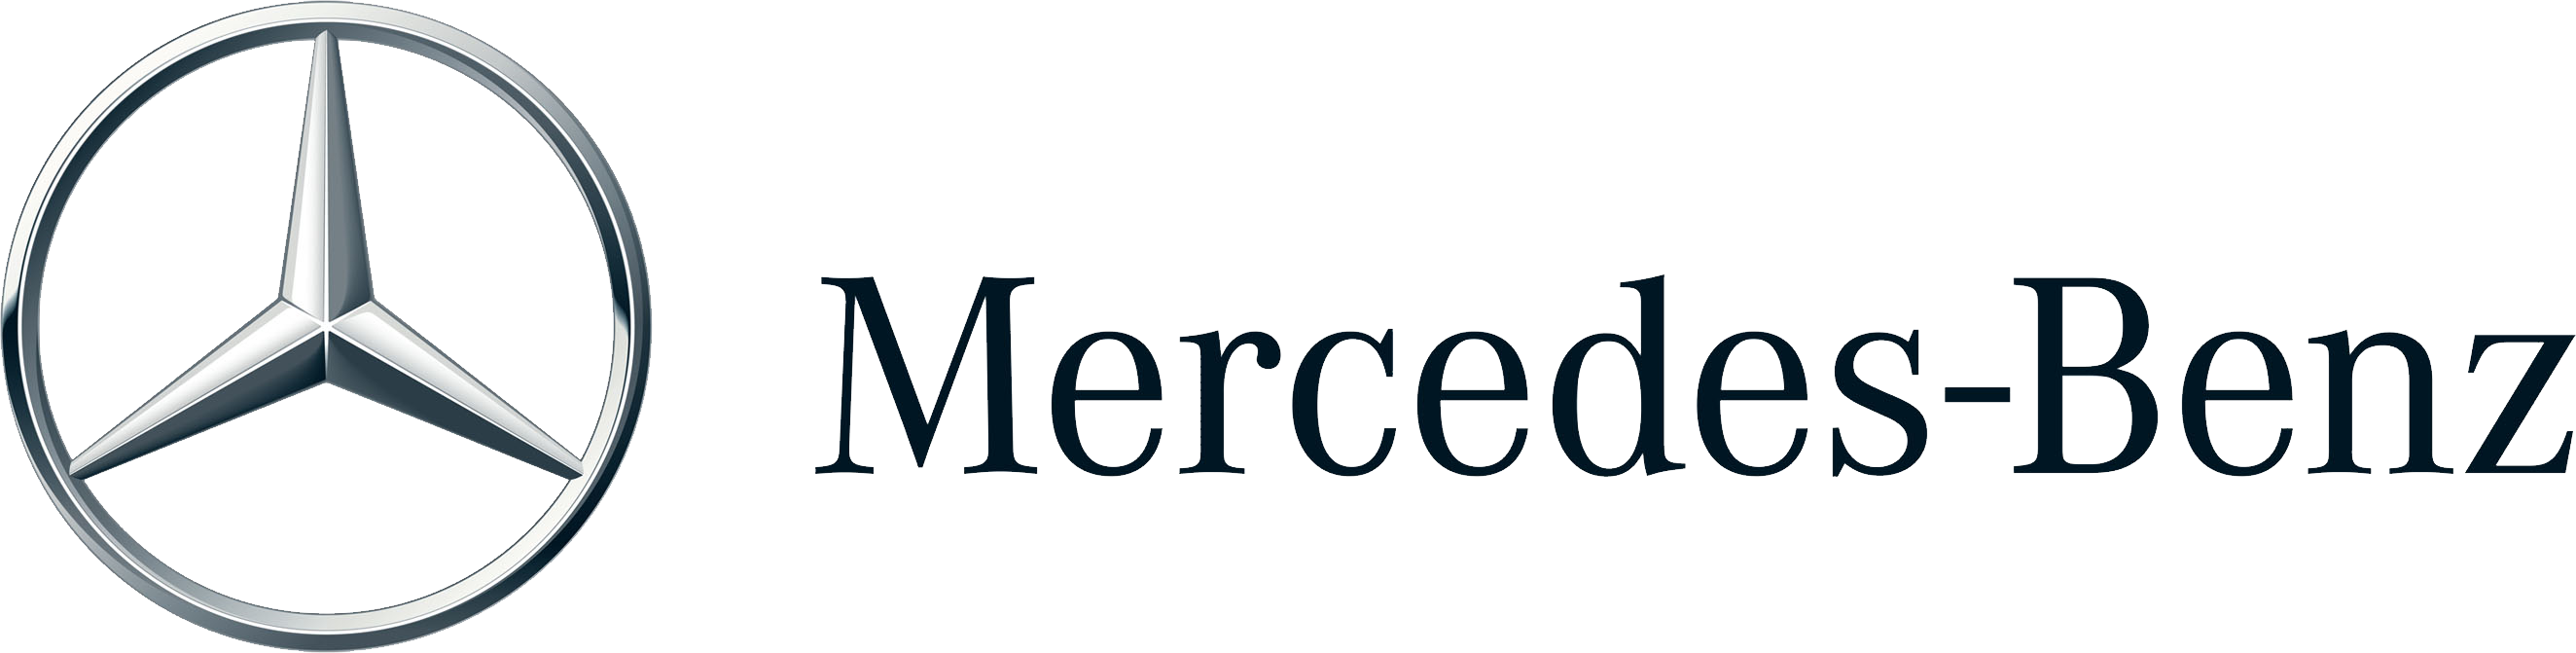 Mercedes Logo Png - Mercedes Benz, Transparent background PNG HD thumbnail